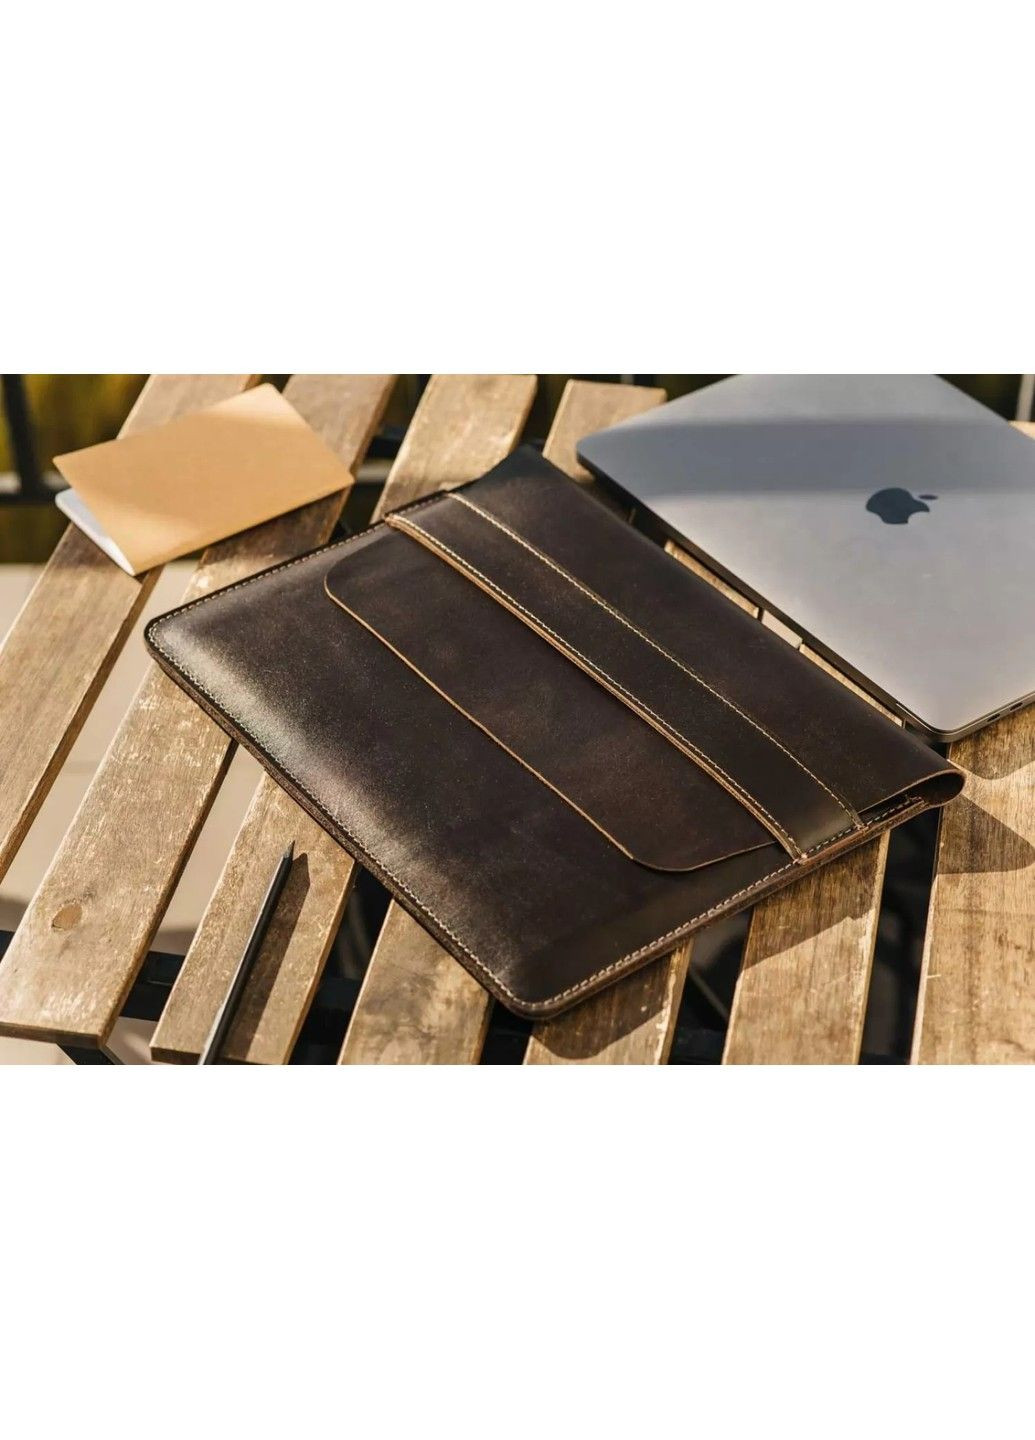 Кожаный Чехол для ноутбука и Ipad Sleeve Skin and Skin (285718838)